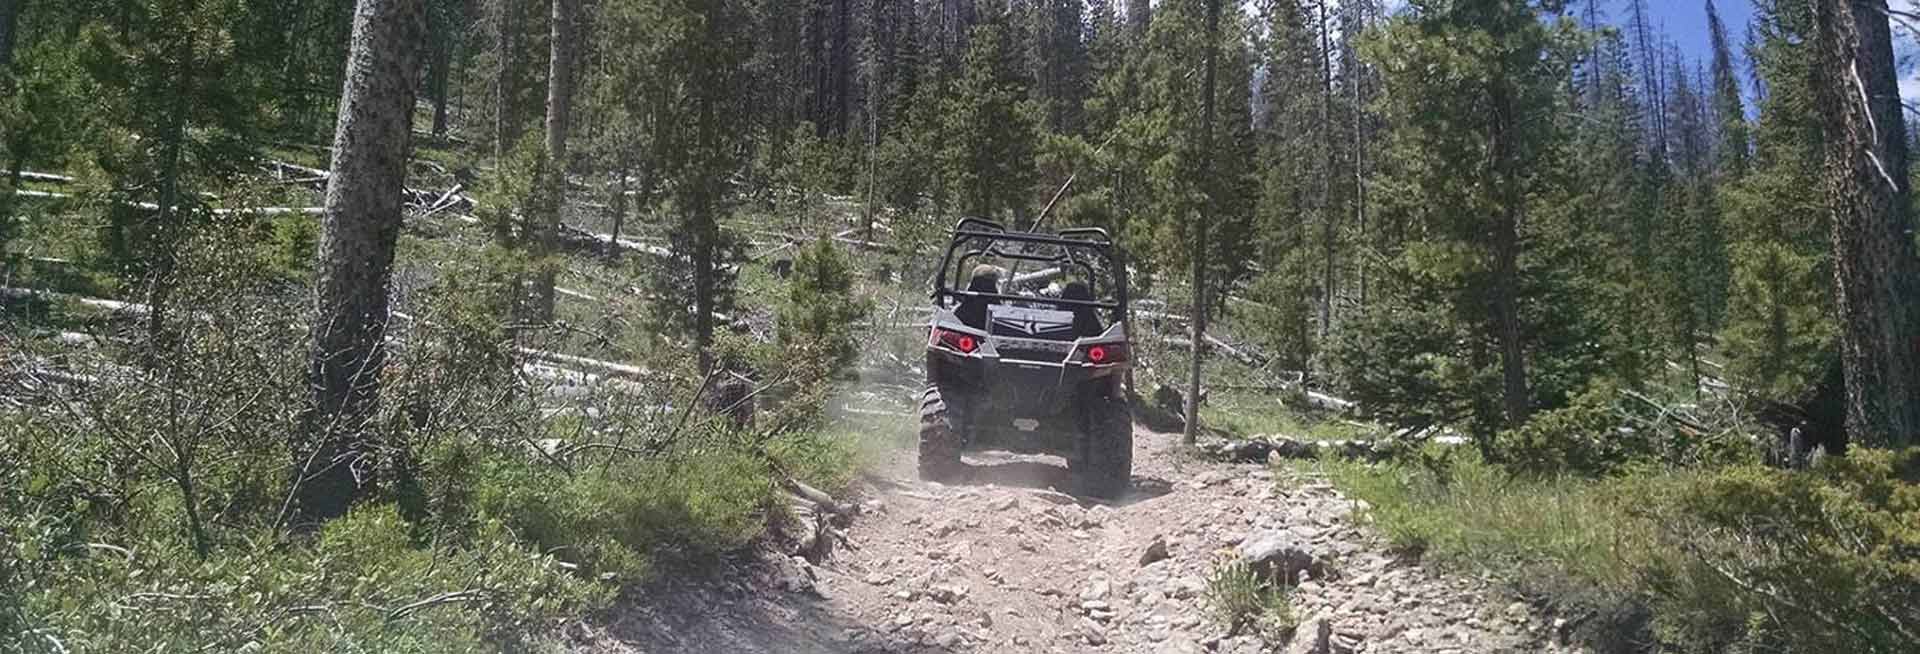 ATV on a dirt trail.